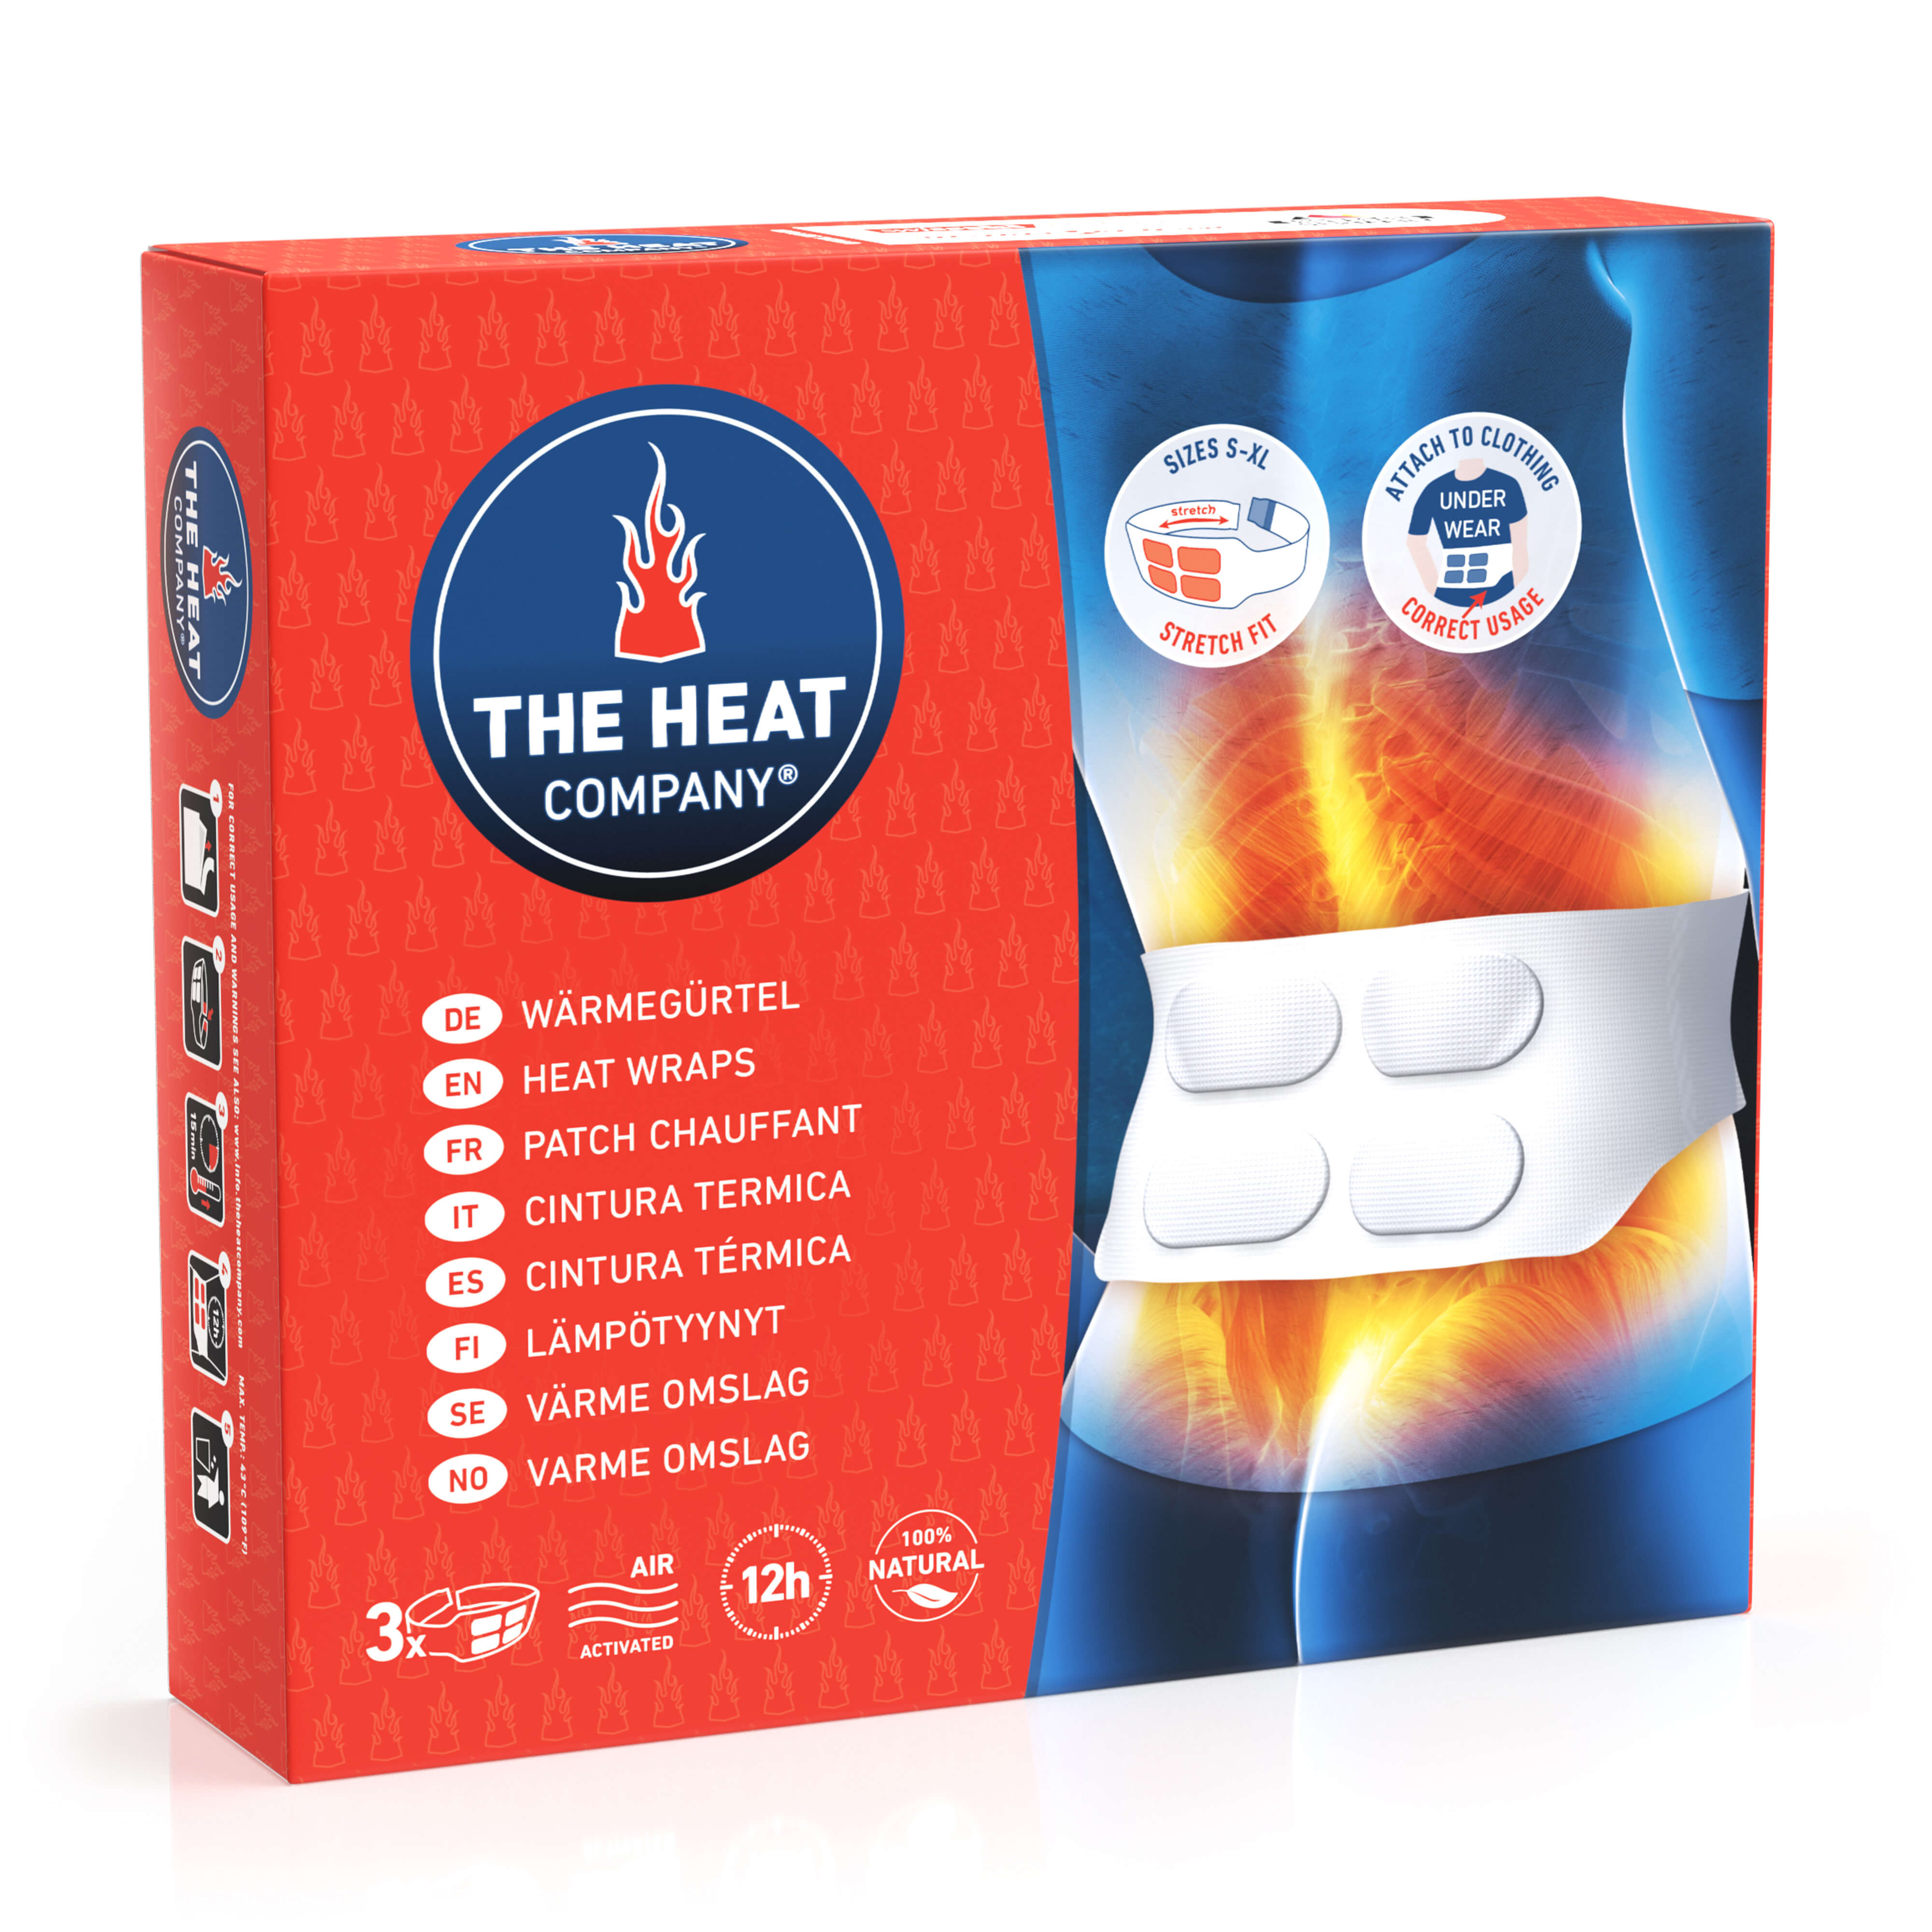 THE HEAT COMPANY Heat Wraps